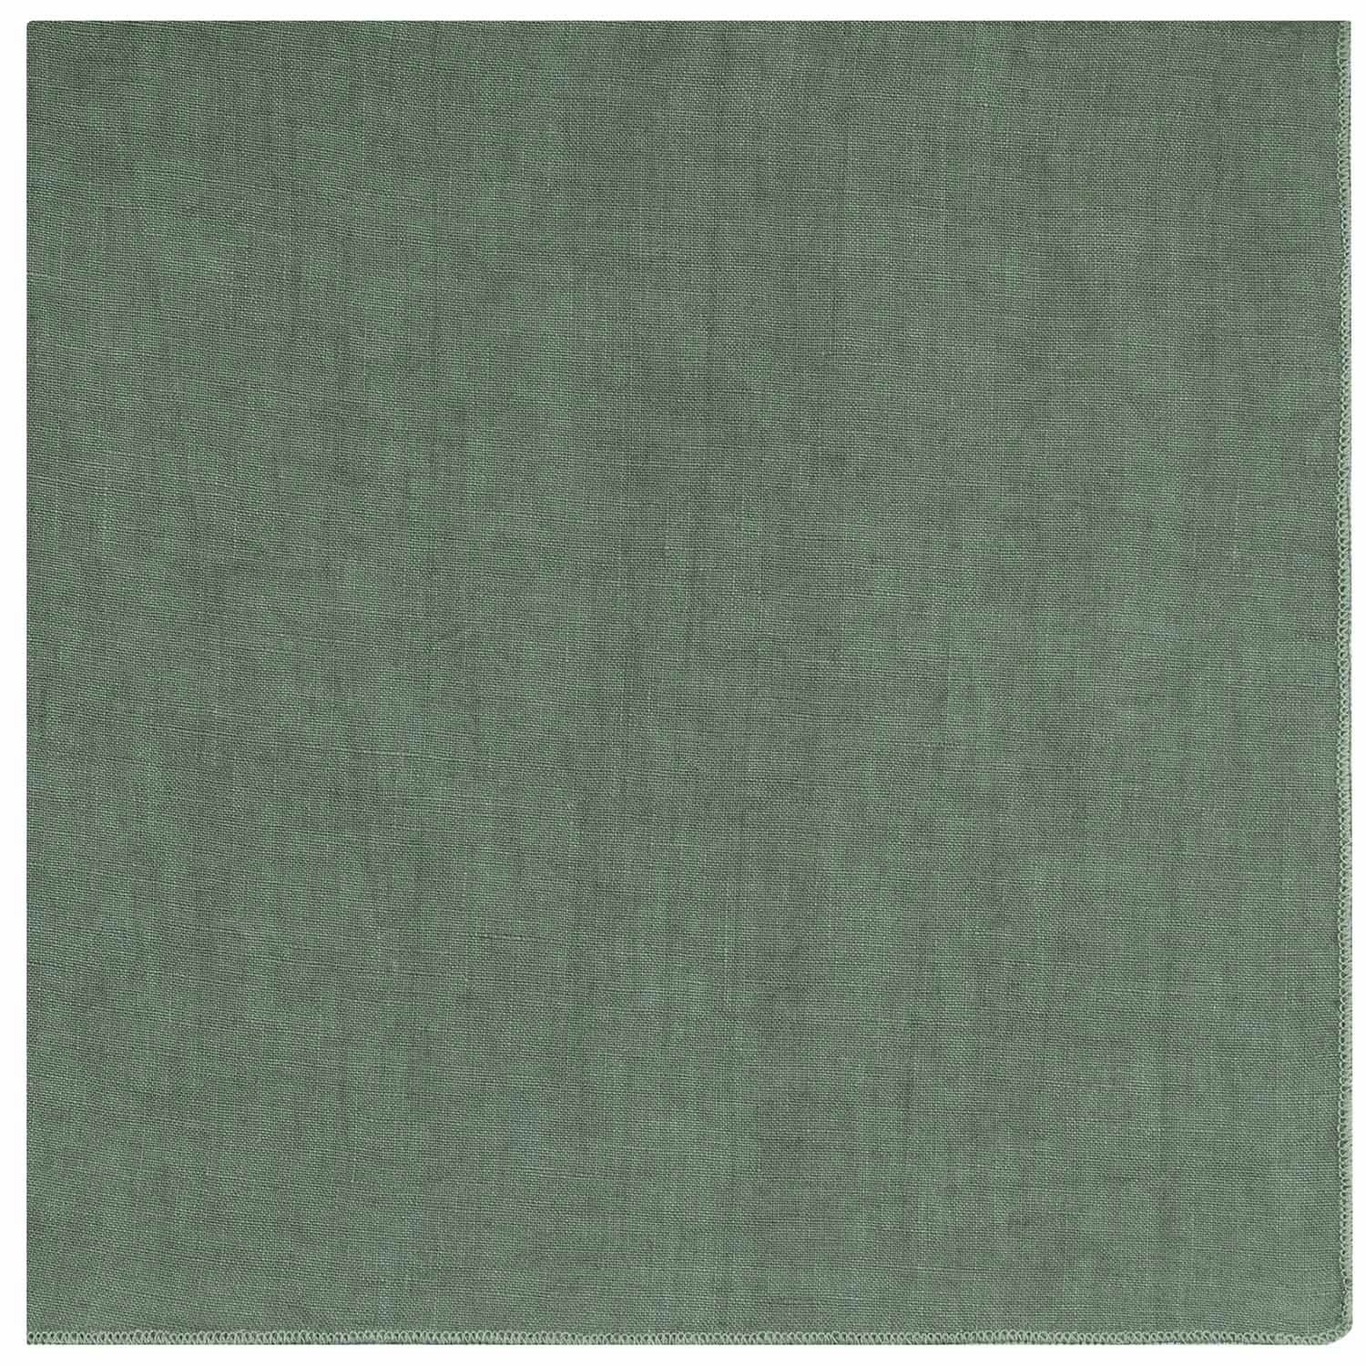 LINEO Tissue Linen, Duck Green